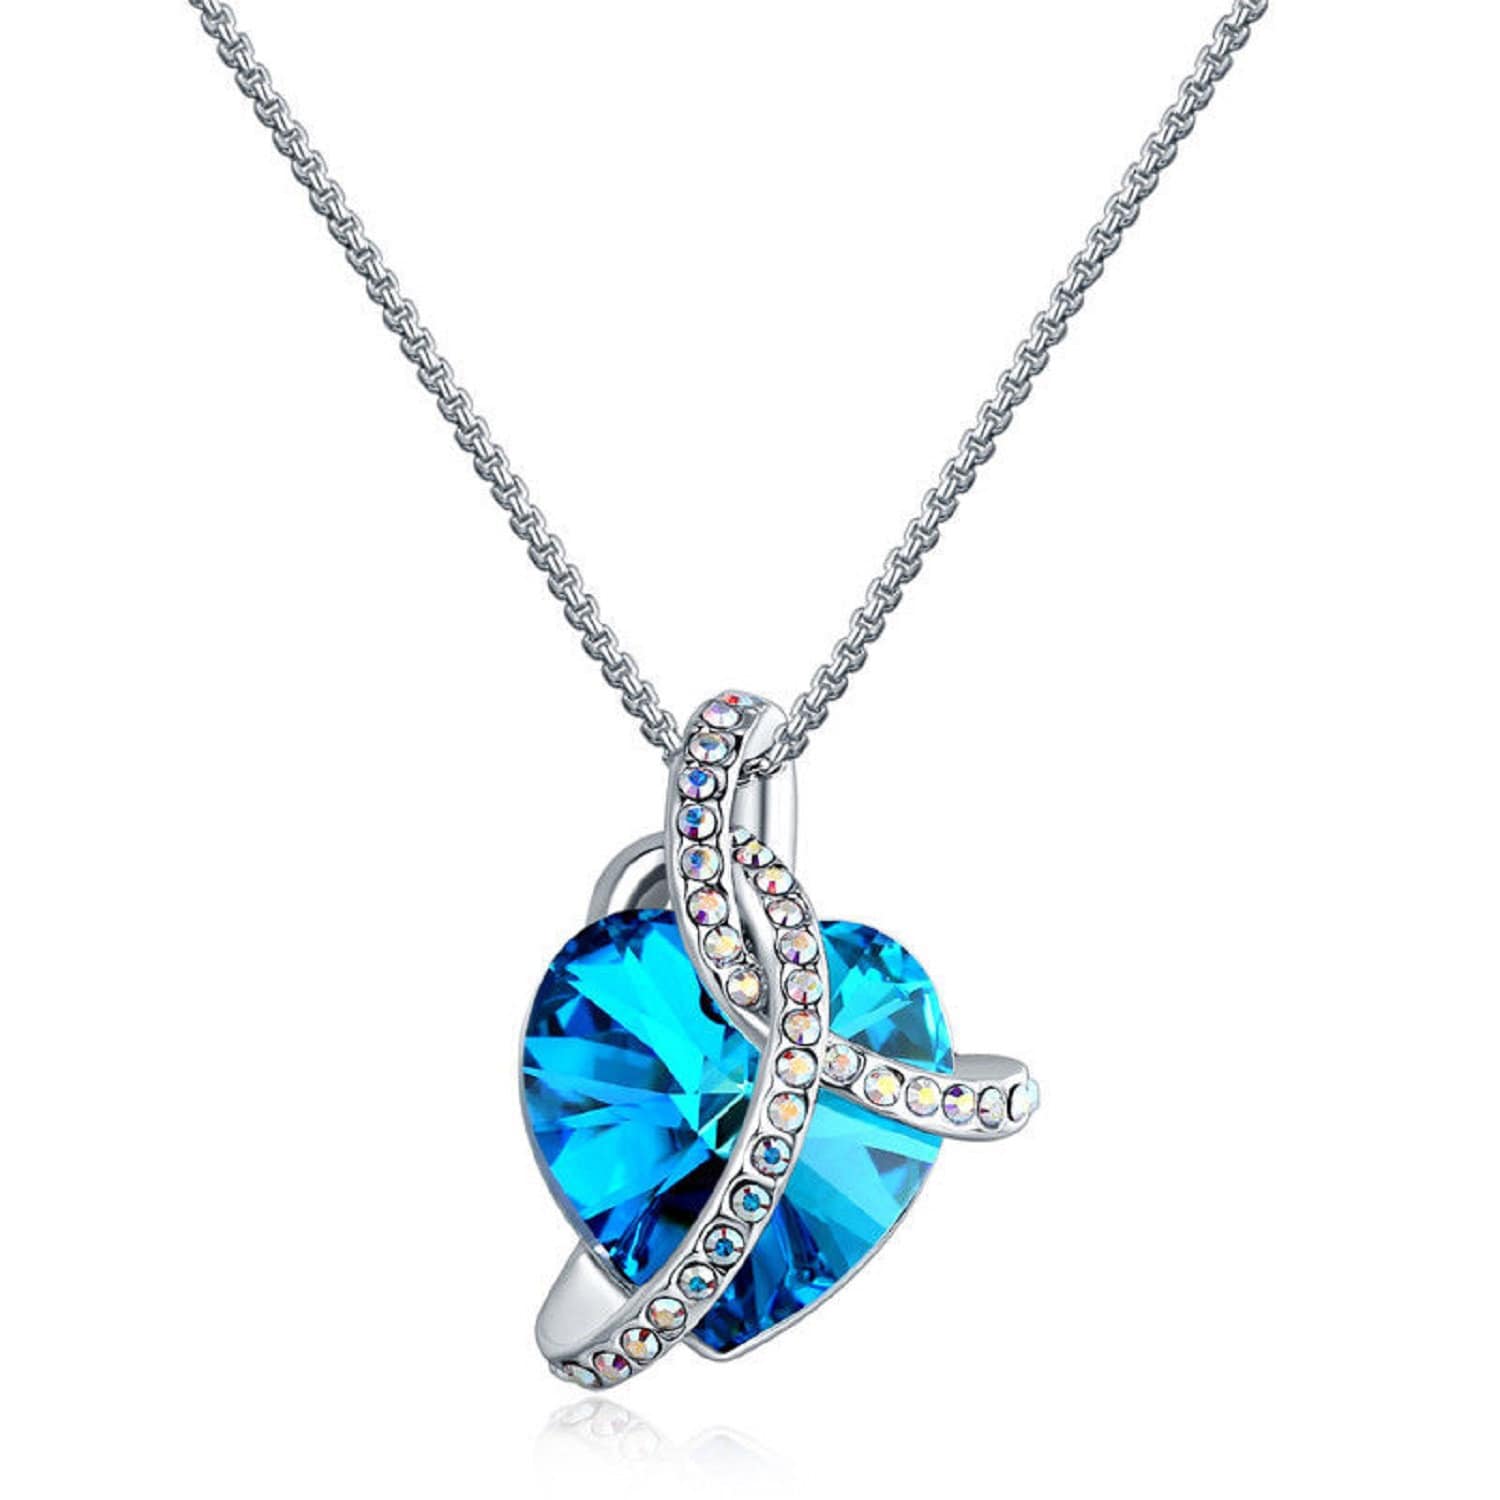 Stunning Swarovski Blue Crystal Heart Necklace